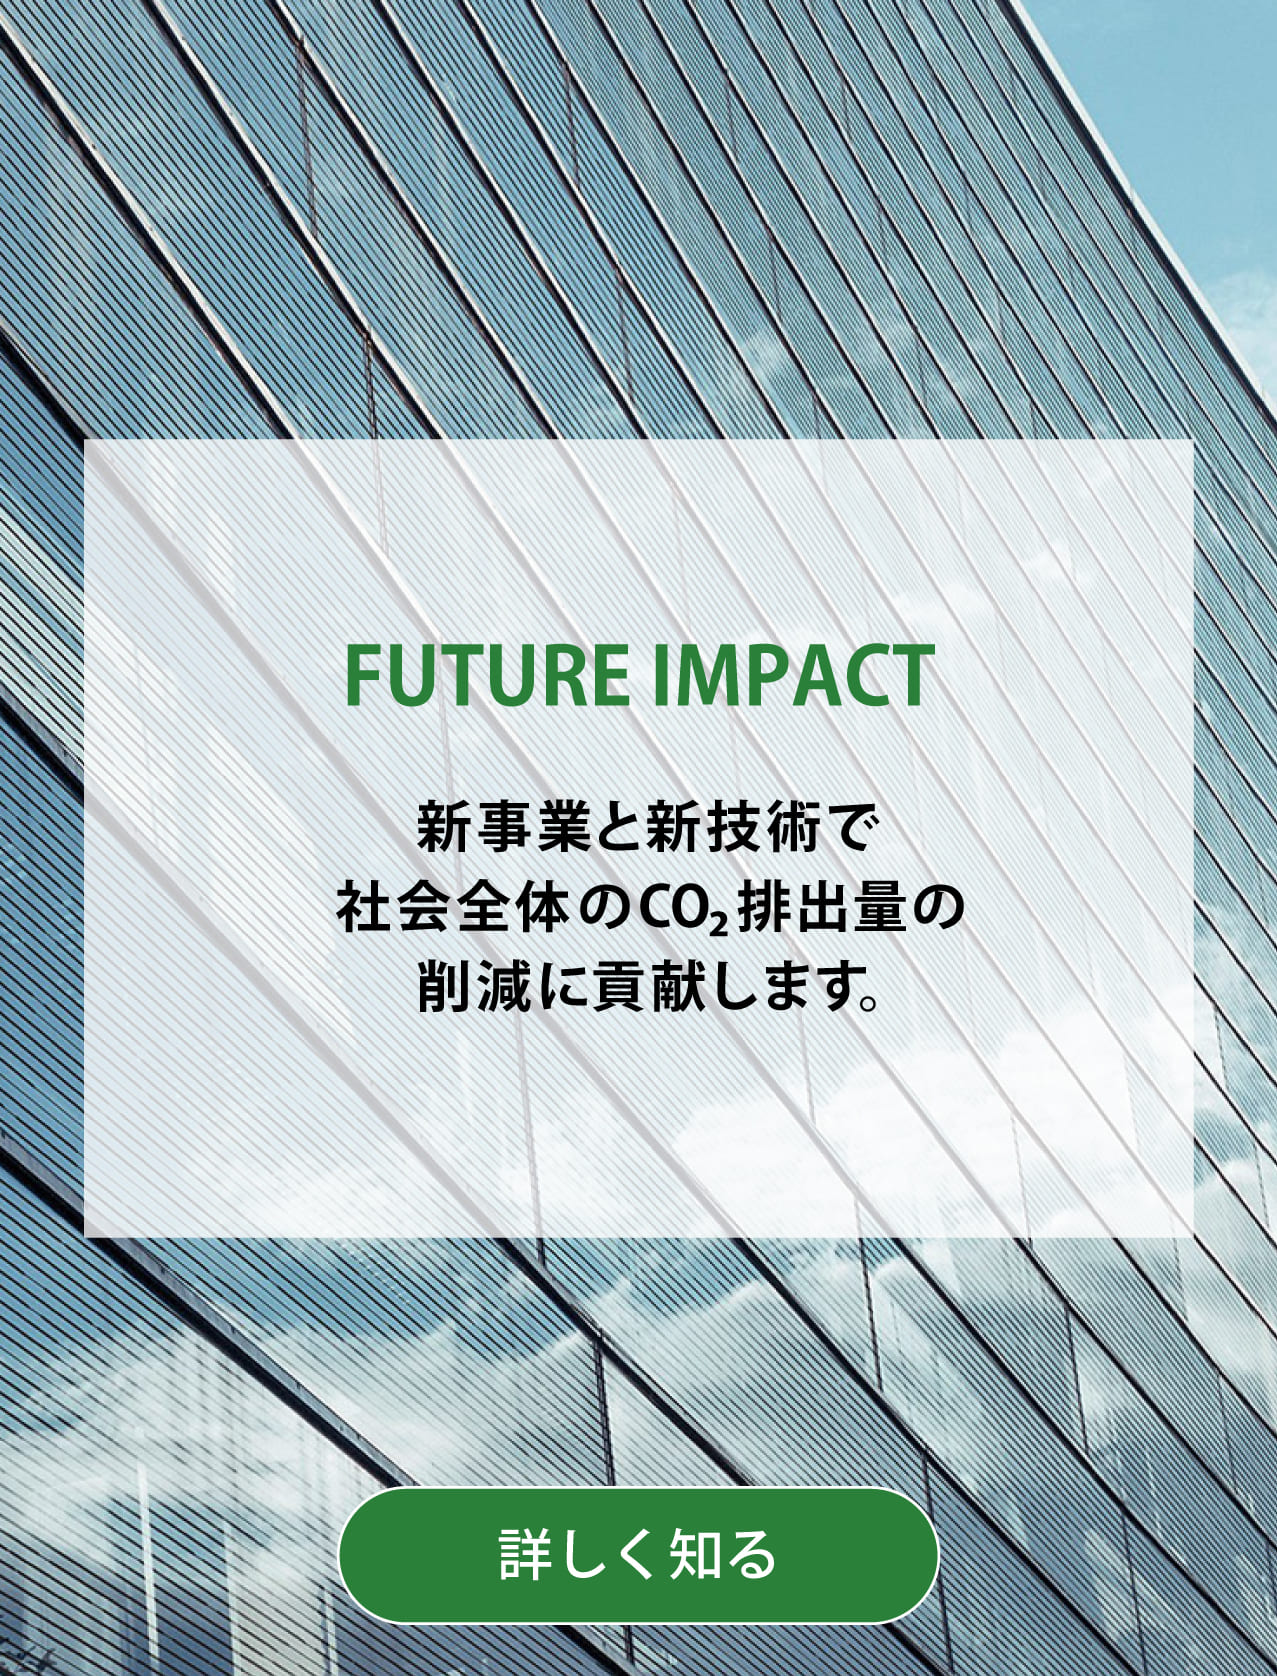 FUTURE IMPACT 新事業と新技術で社会全体のCO₂排出量の削減に貢献します。詳しく知る